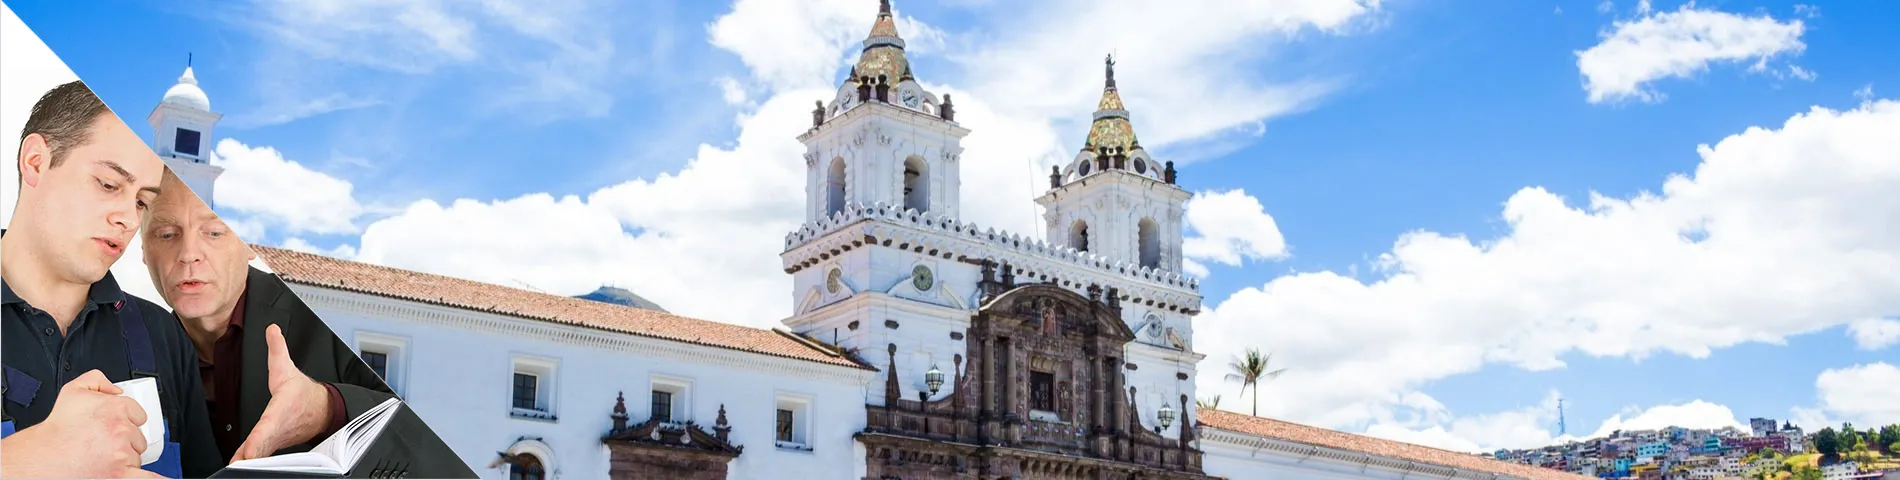 Quito - Výuka jeden na jednoho